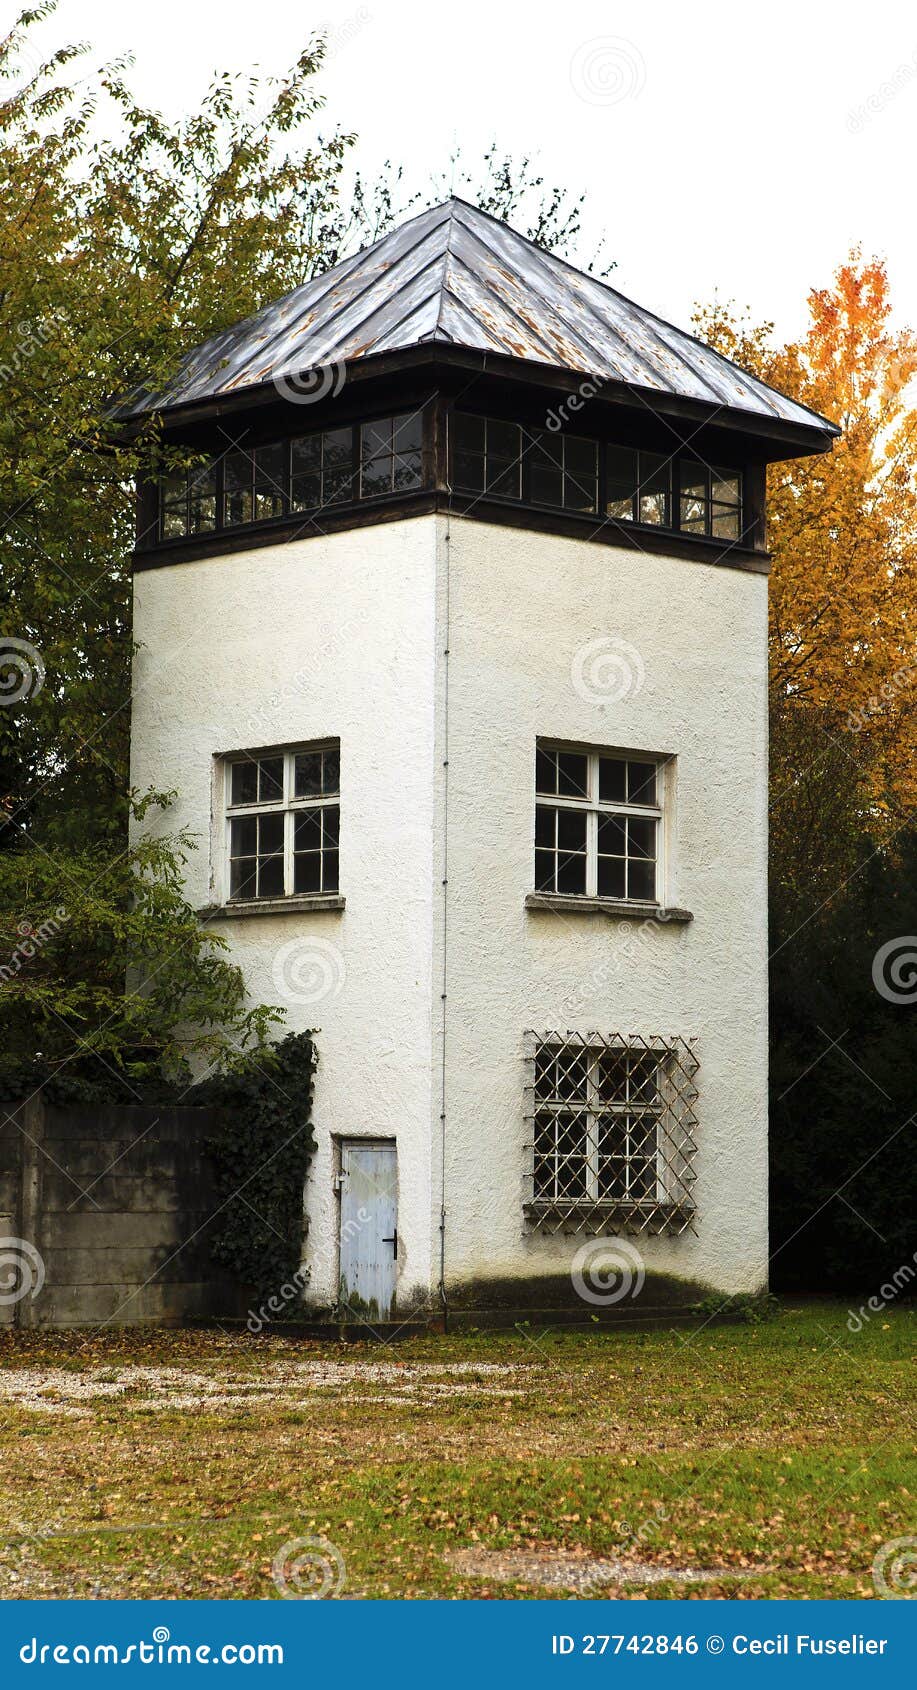 SEPA | Sparkasse Dachau